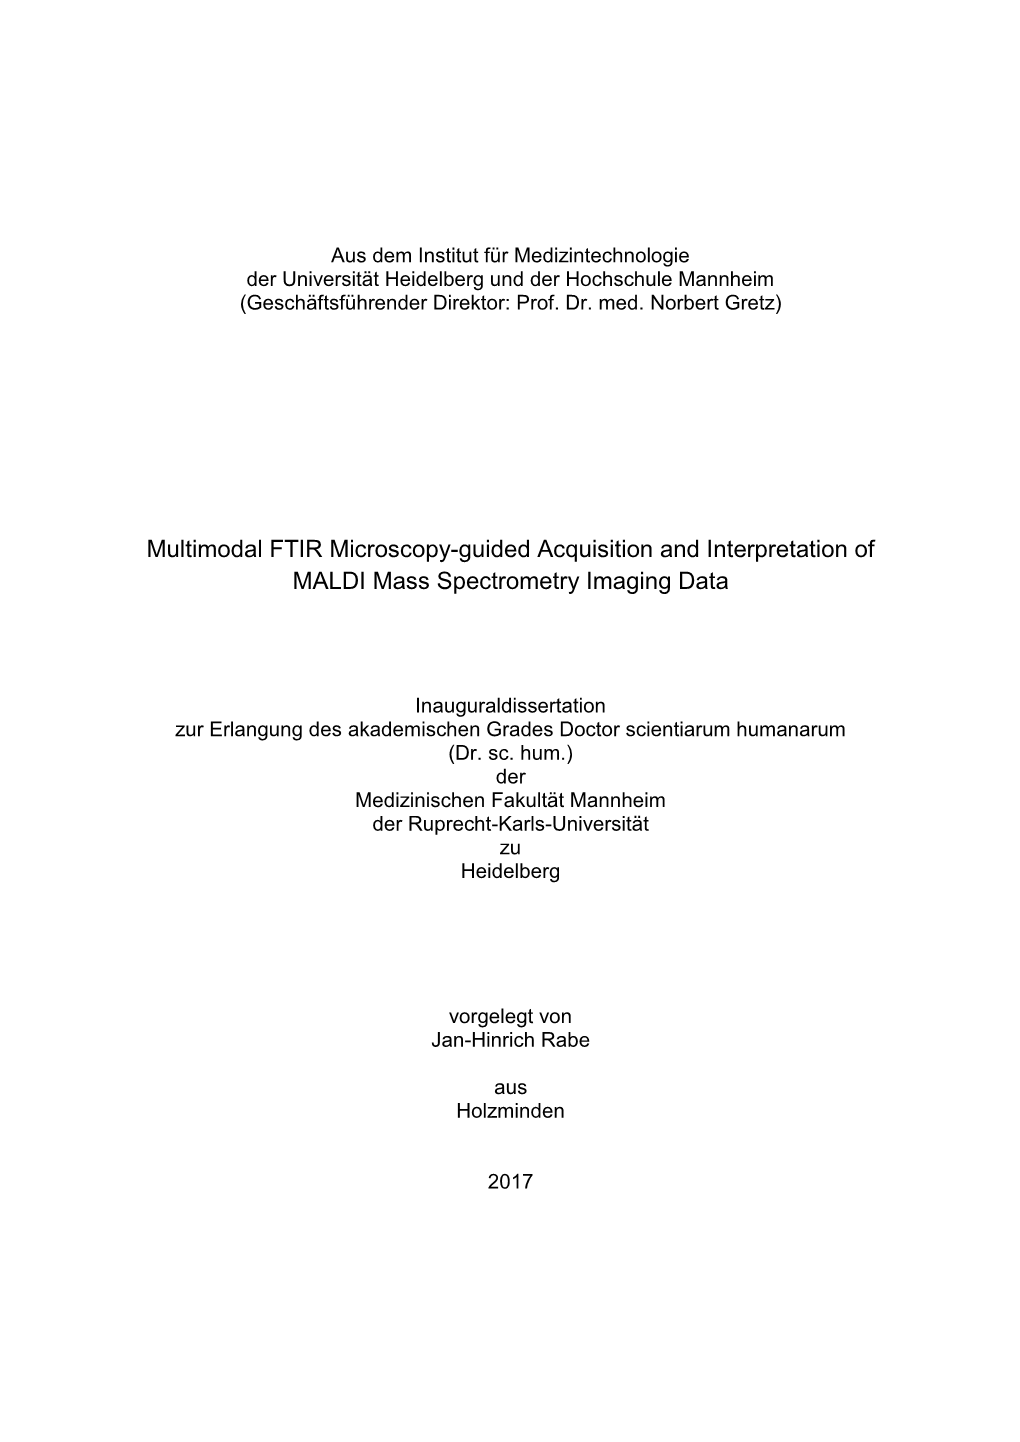 Multimodal FTIR Microscopy-Guided Acquisition and Interpretation of MALDI Mass Spectrometry Imaging Data